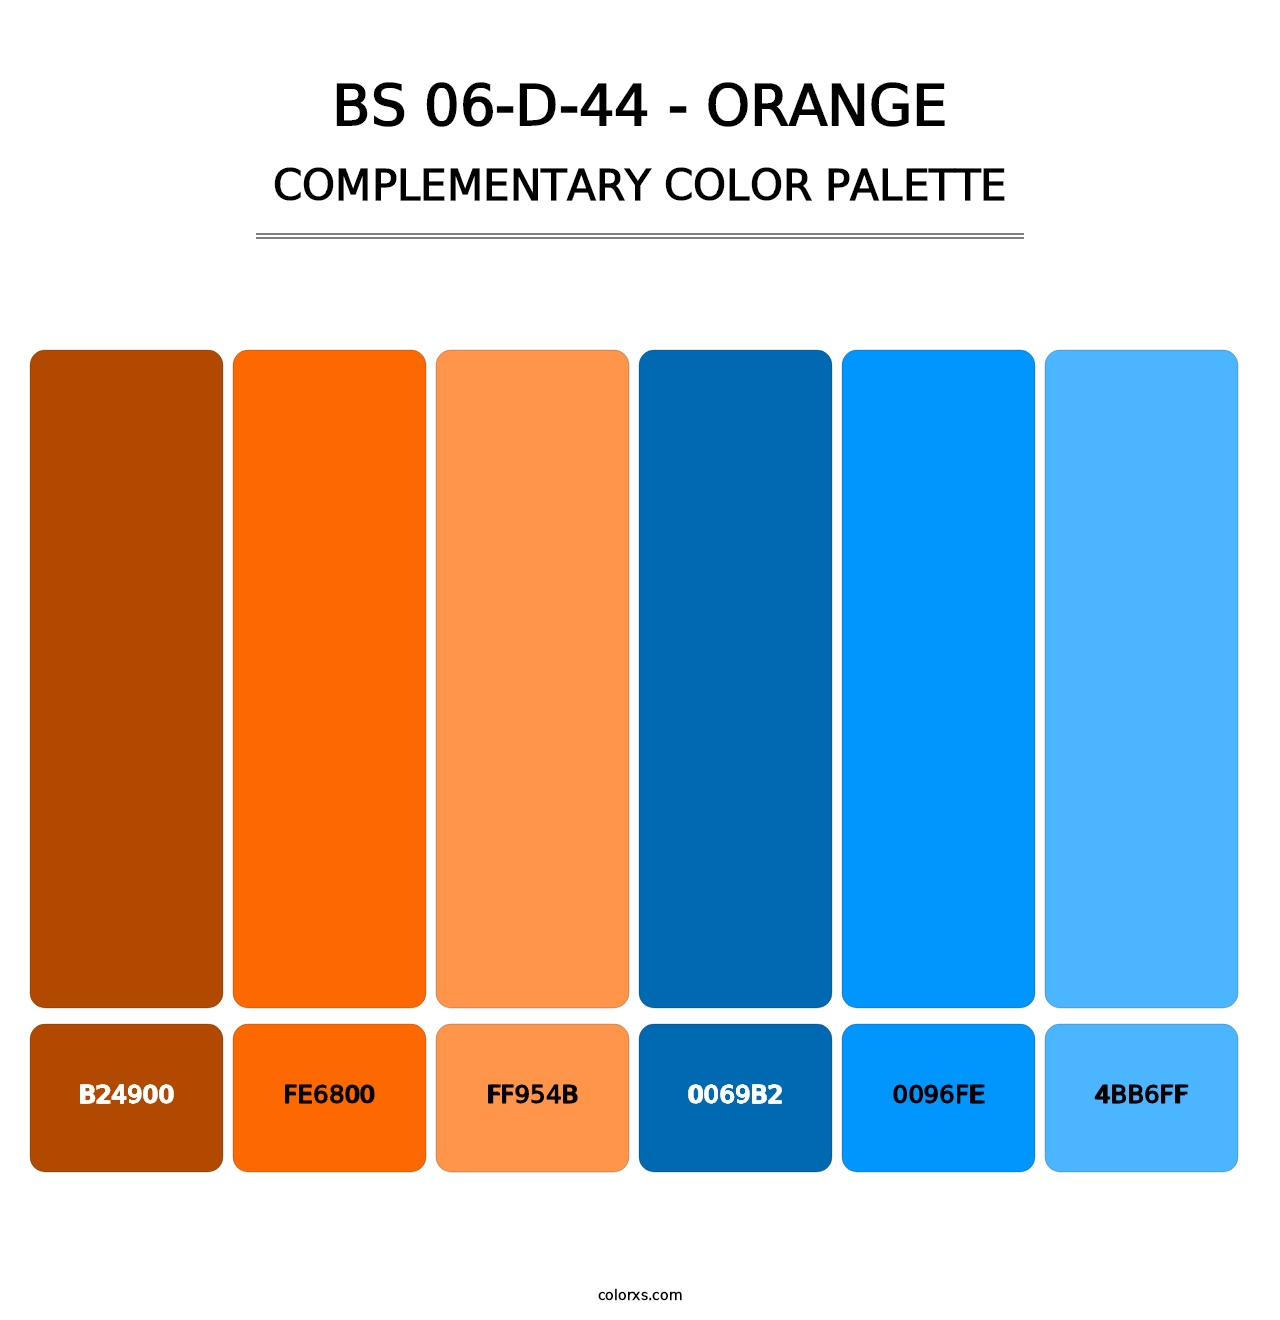 BS 06-D-44 - Orange - Complementary Color Palette